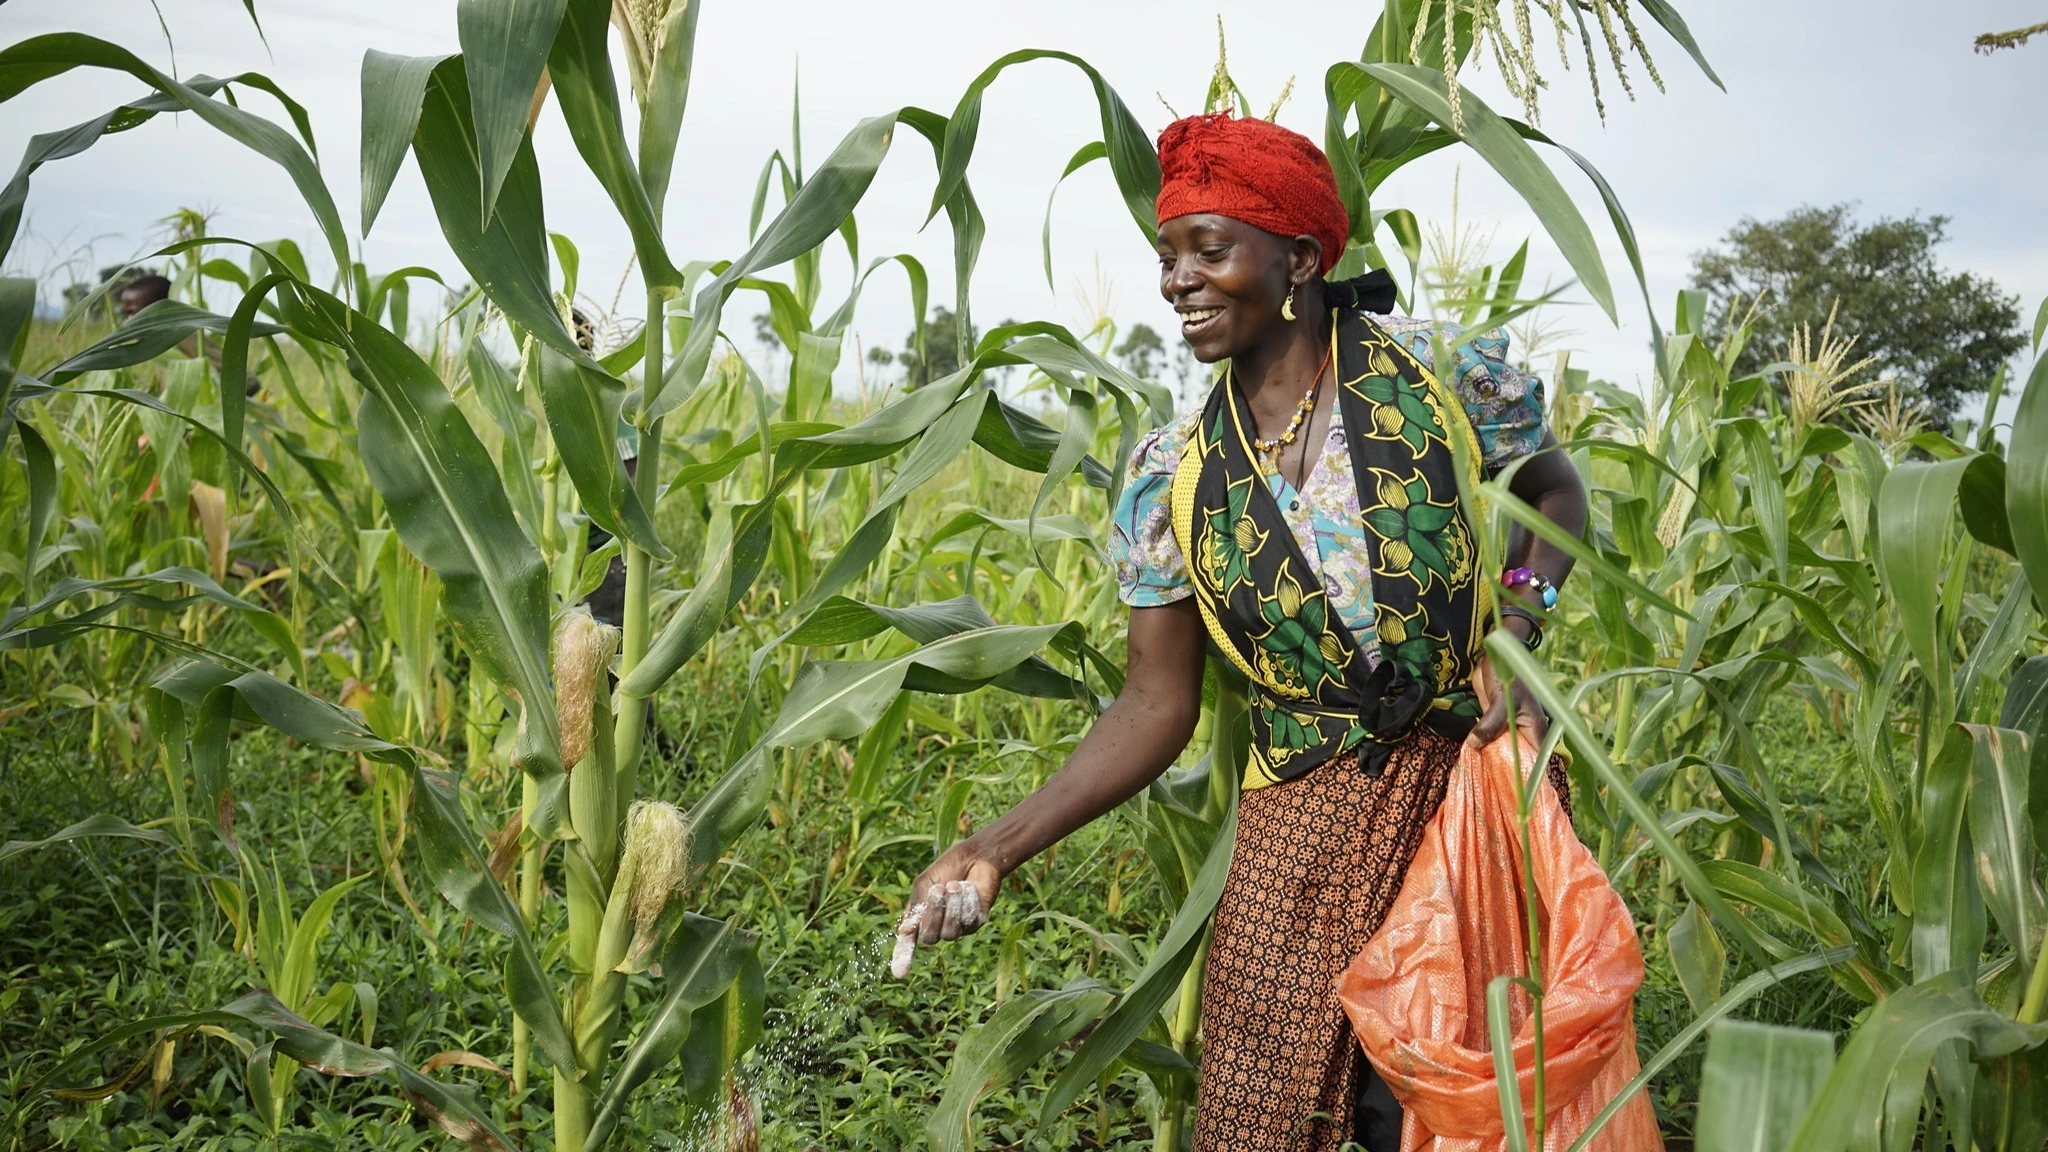 The FOSTER program targets 800,000 smallholder farmers